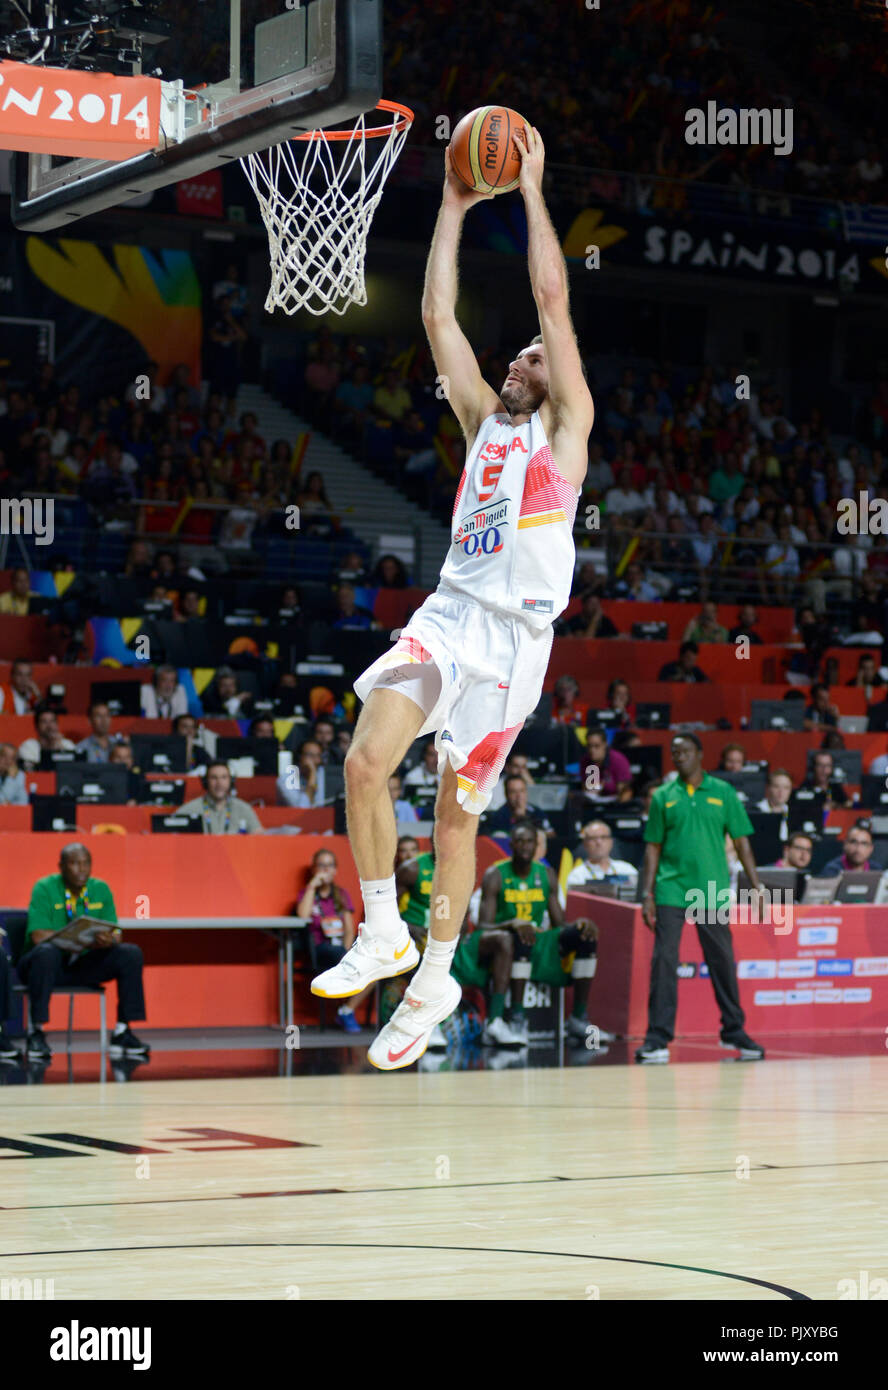 Rudy Fernandez dunking. Spain Basketball National Team, World Cup 2014 Stock Photo